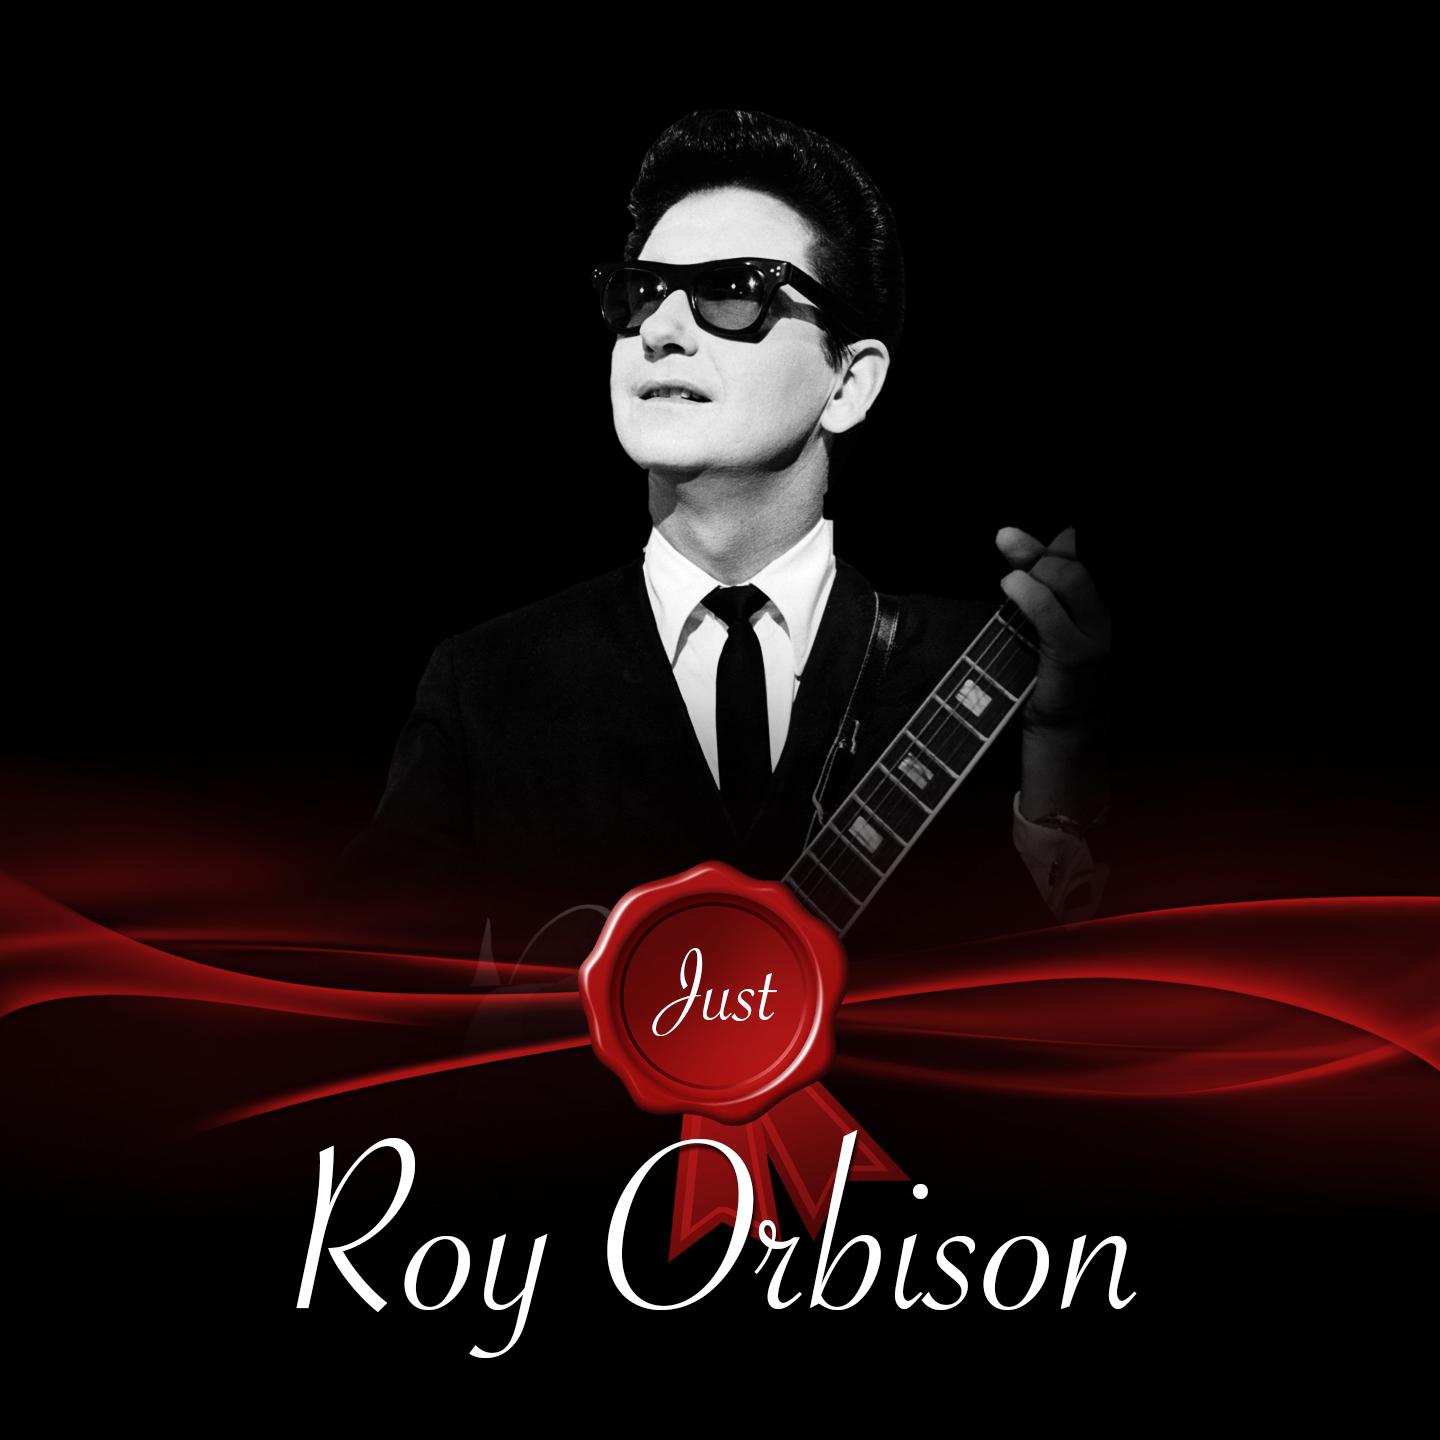 Just - Roy Orbison